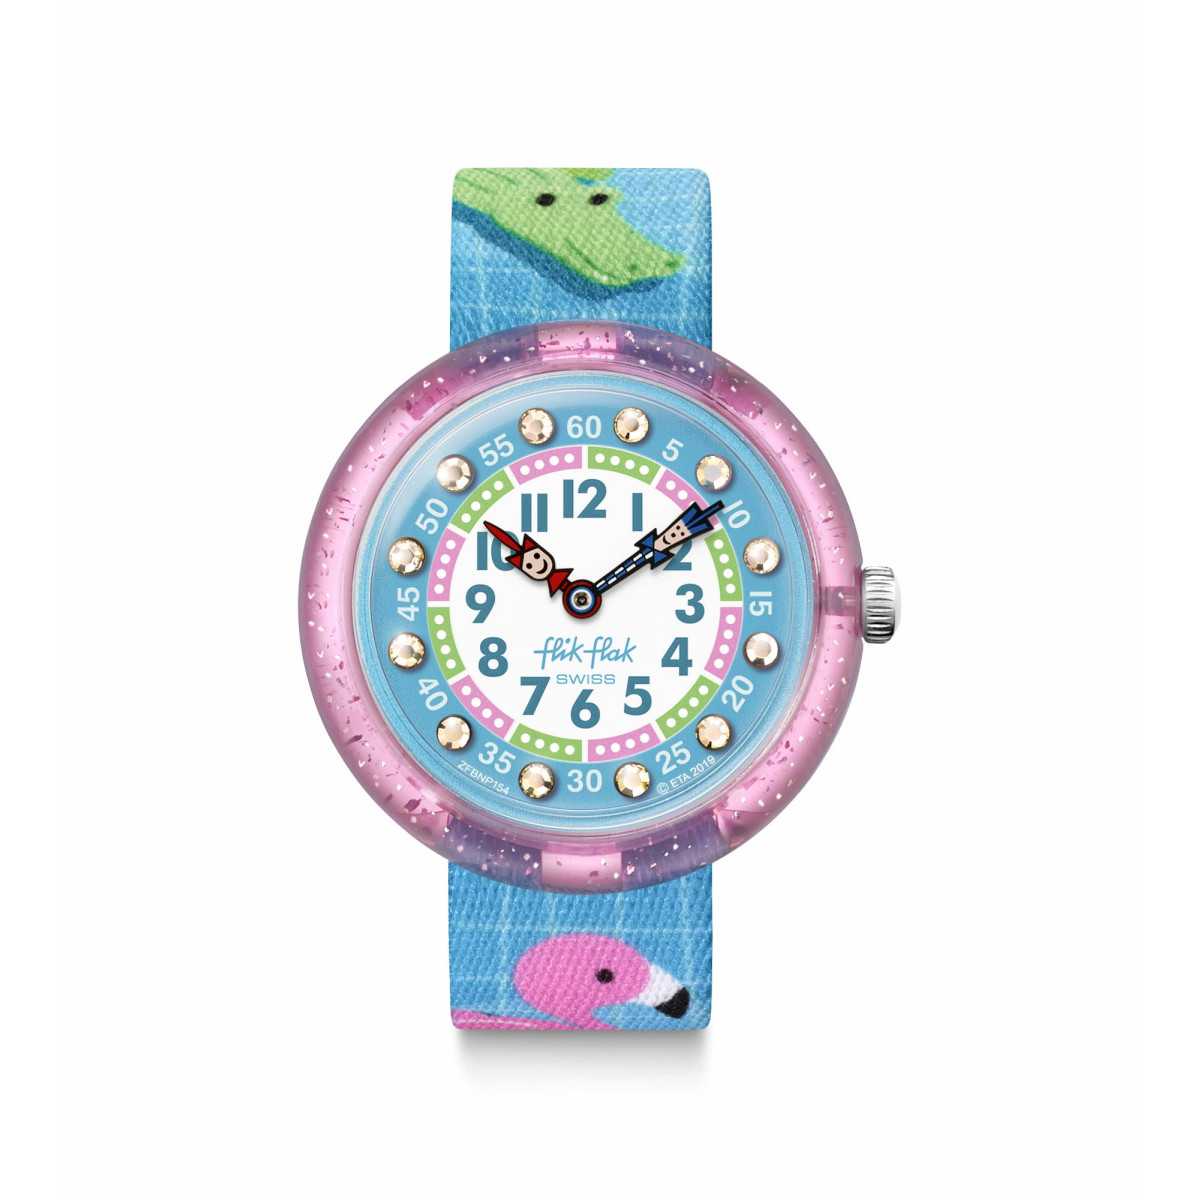 Reloj Swatch Splashtastic FBNP154